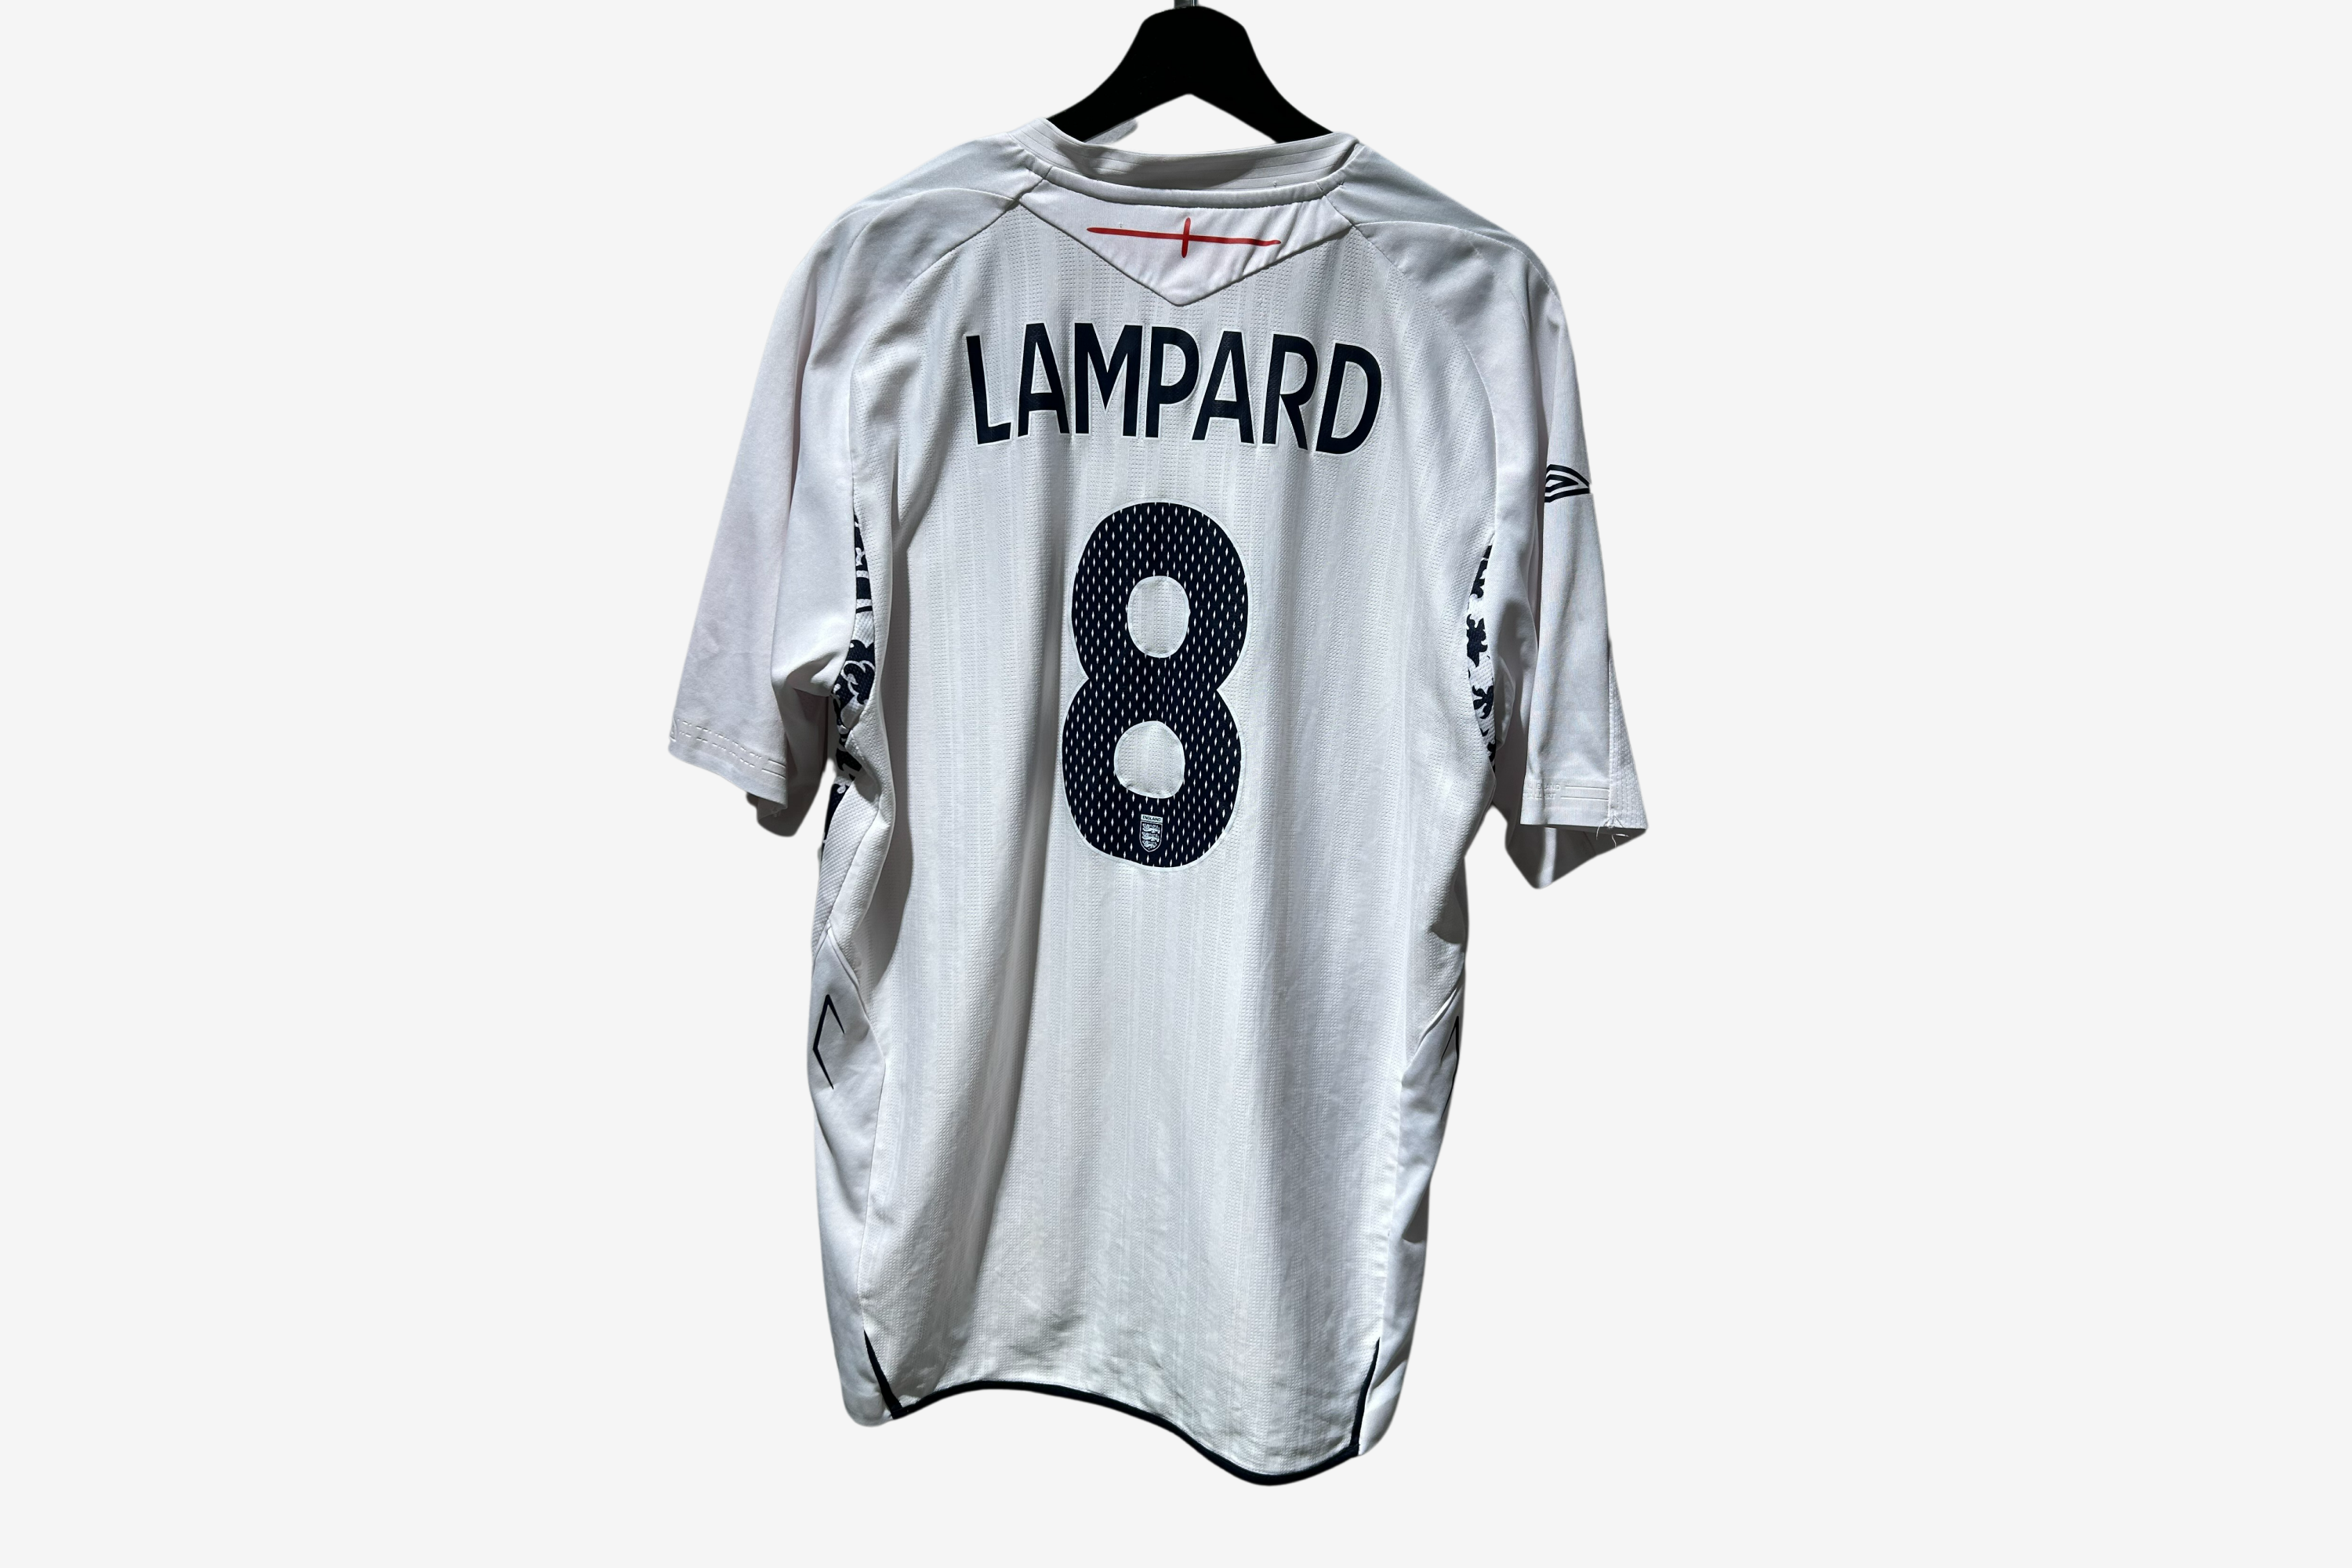 Umbro - England 2008 Home Football Shirt 'LAMPARD'